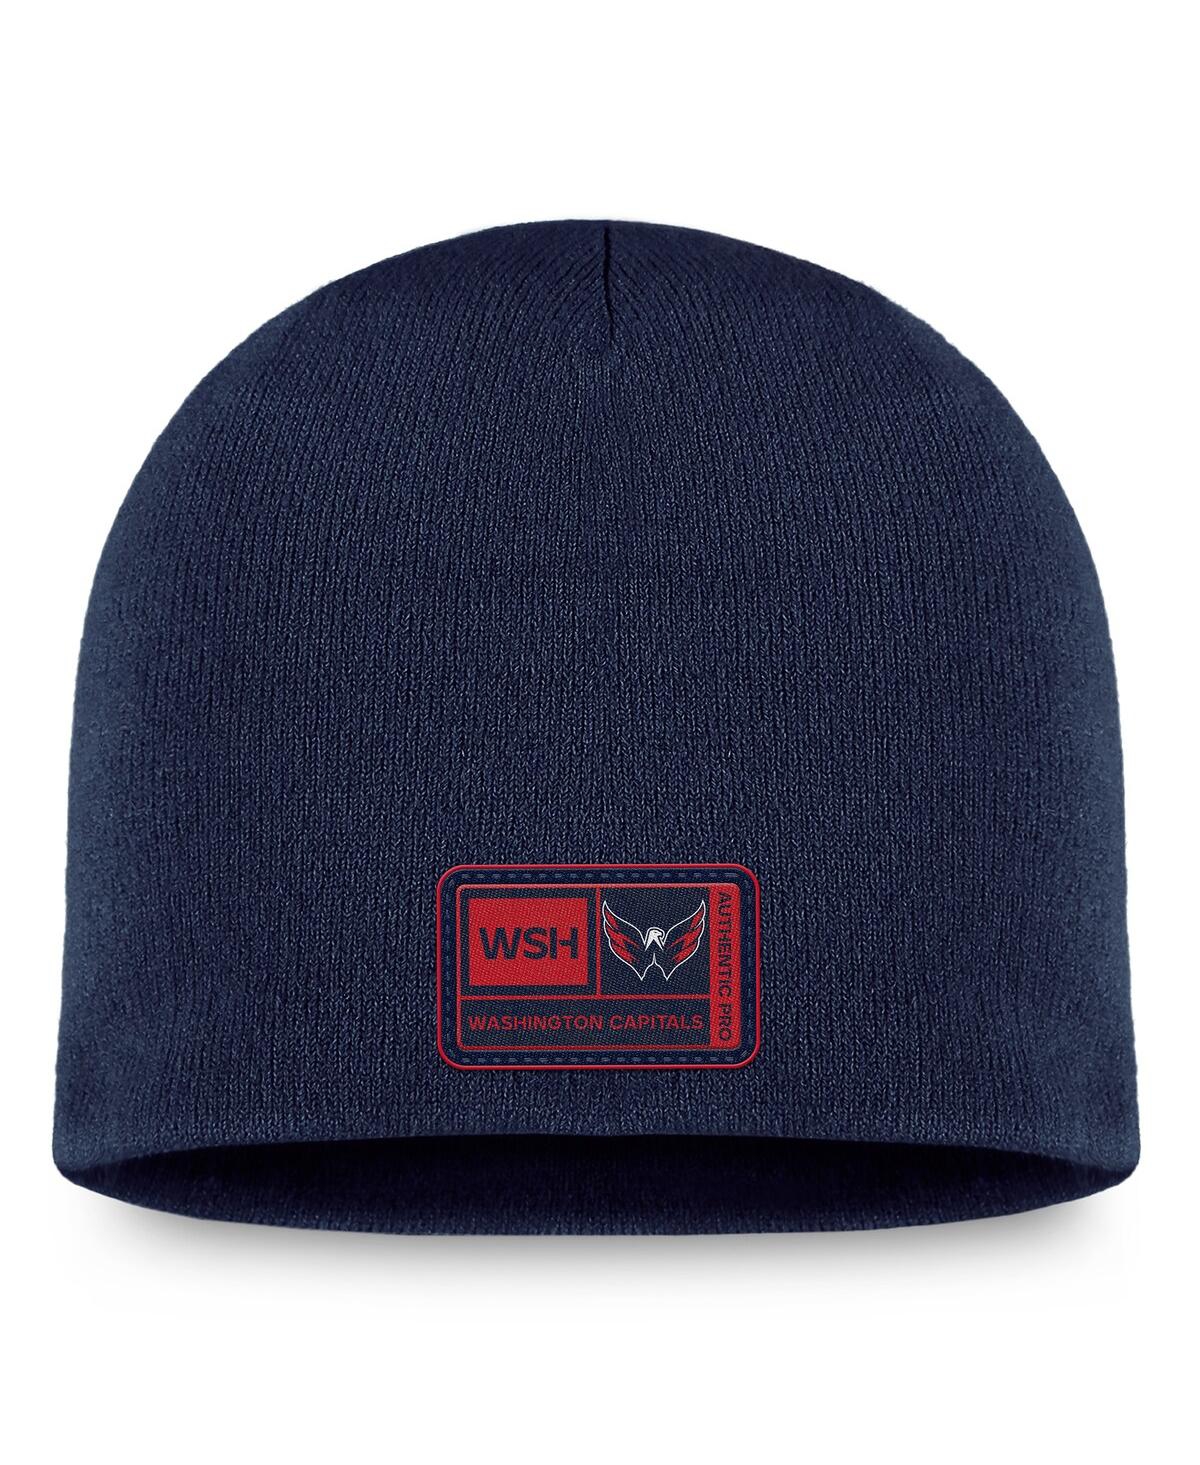 Shop Fanatics Men's  Navy Washington Capitals Authentic Pro Training Camp Knit Hat